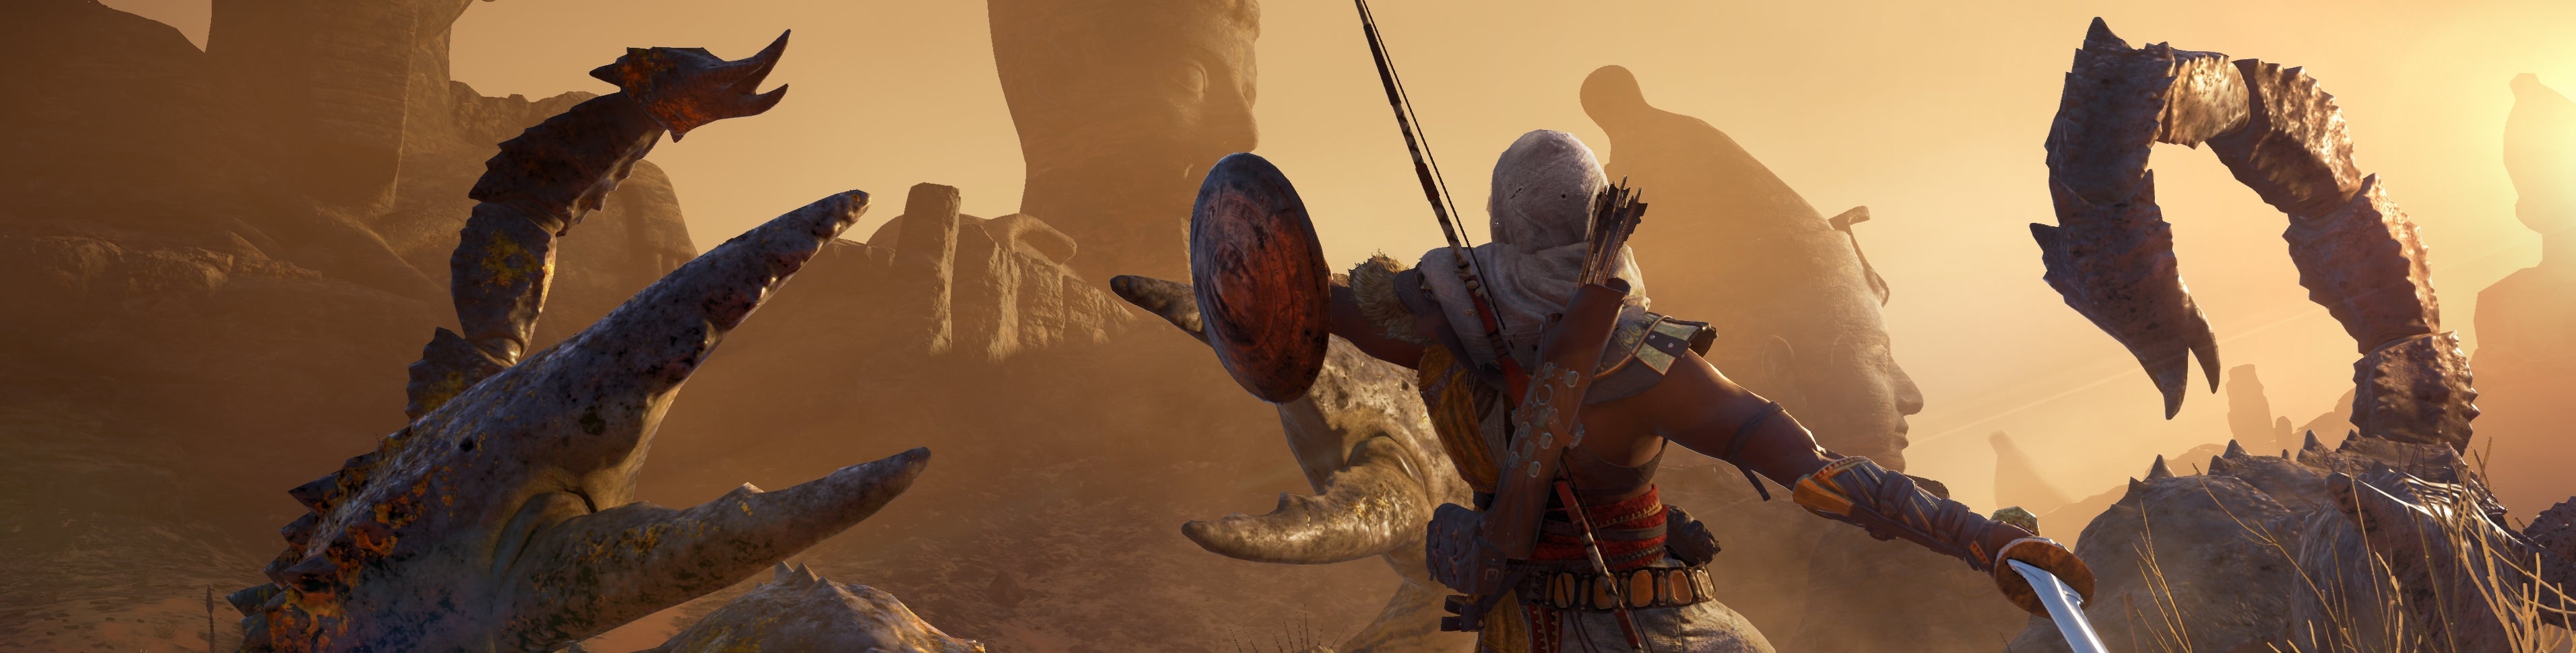 Imagem para Assassin's Creed Origins: Curse of the Pharaohs - Análise